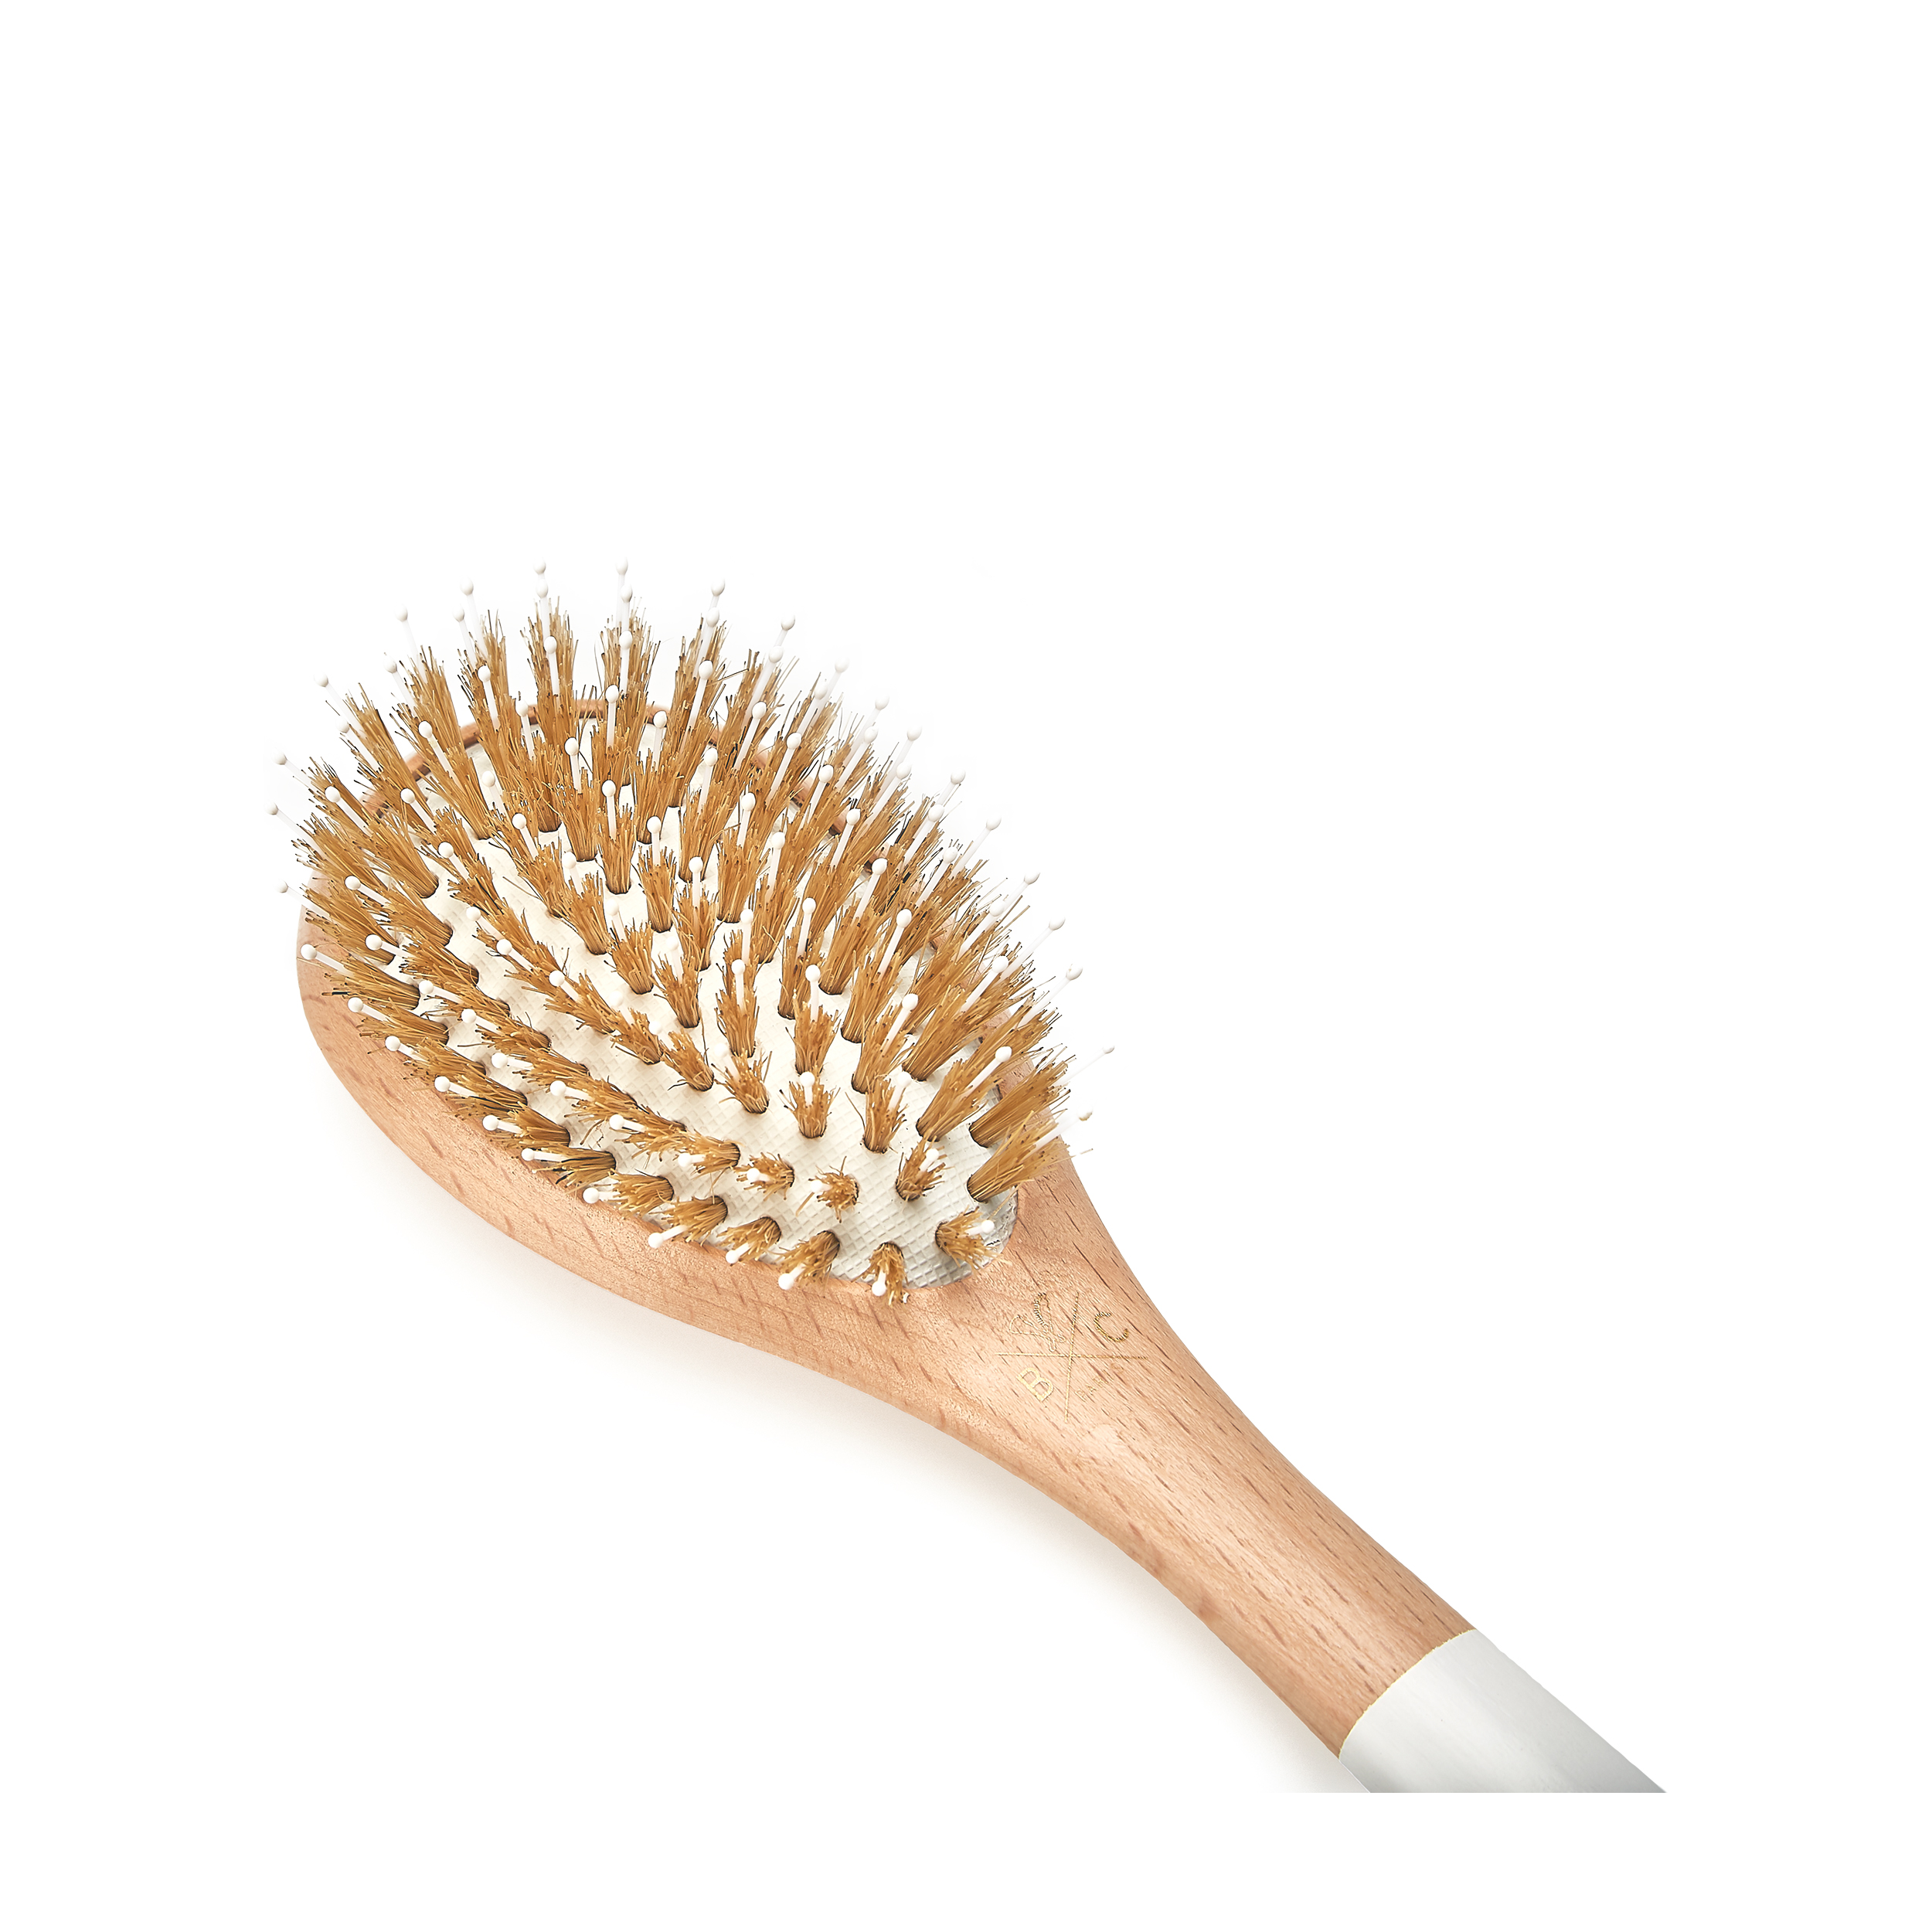 BACHCA BACHCA Расческа для распутывания и разглаживания волос Detangle  Smooth Hair Brush, размер Small 1 шт